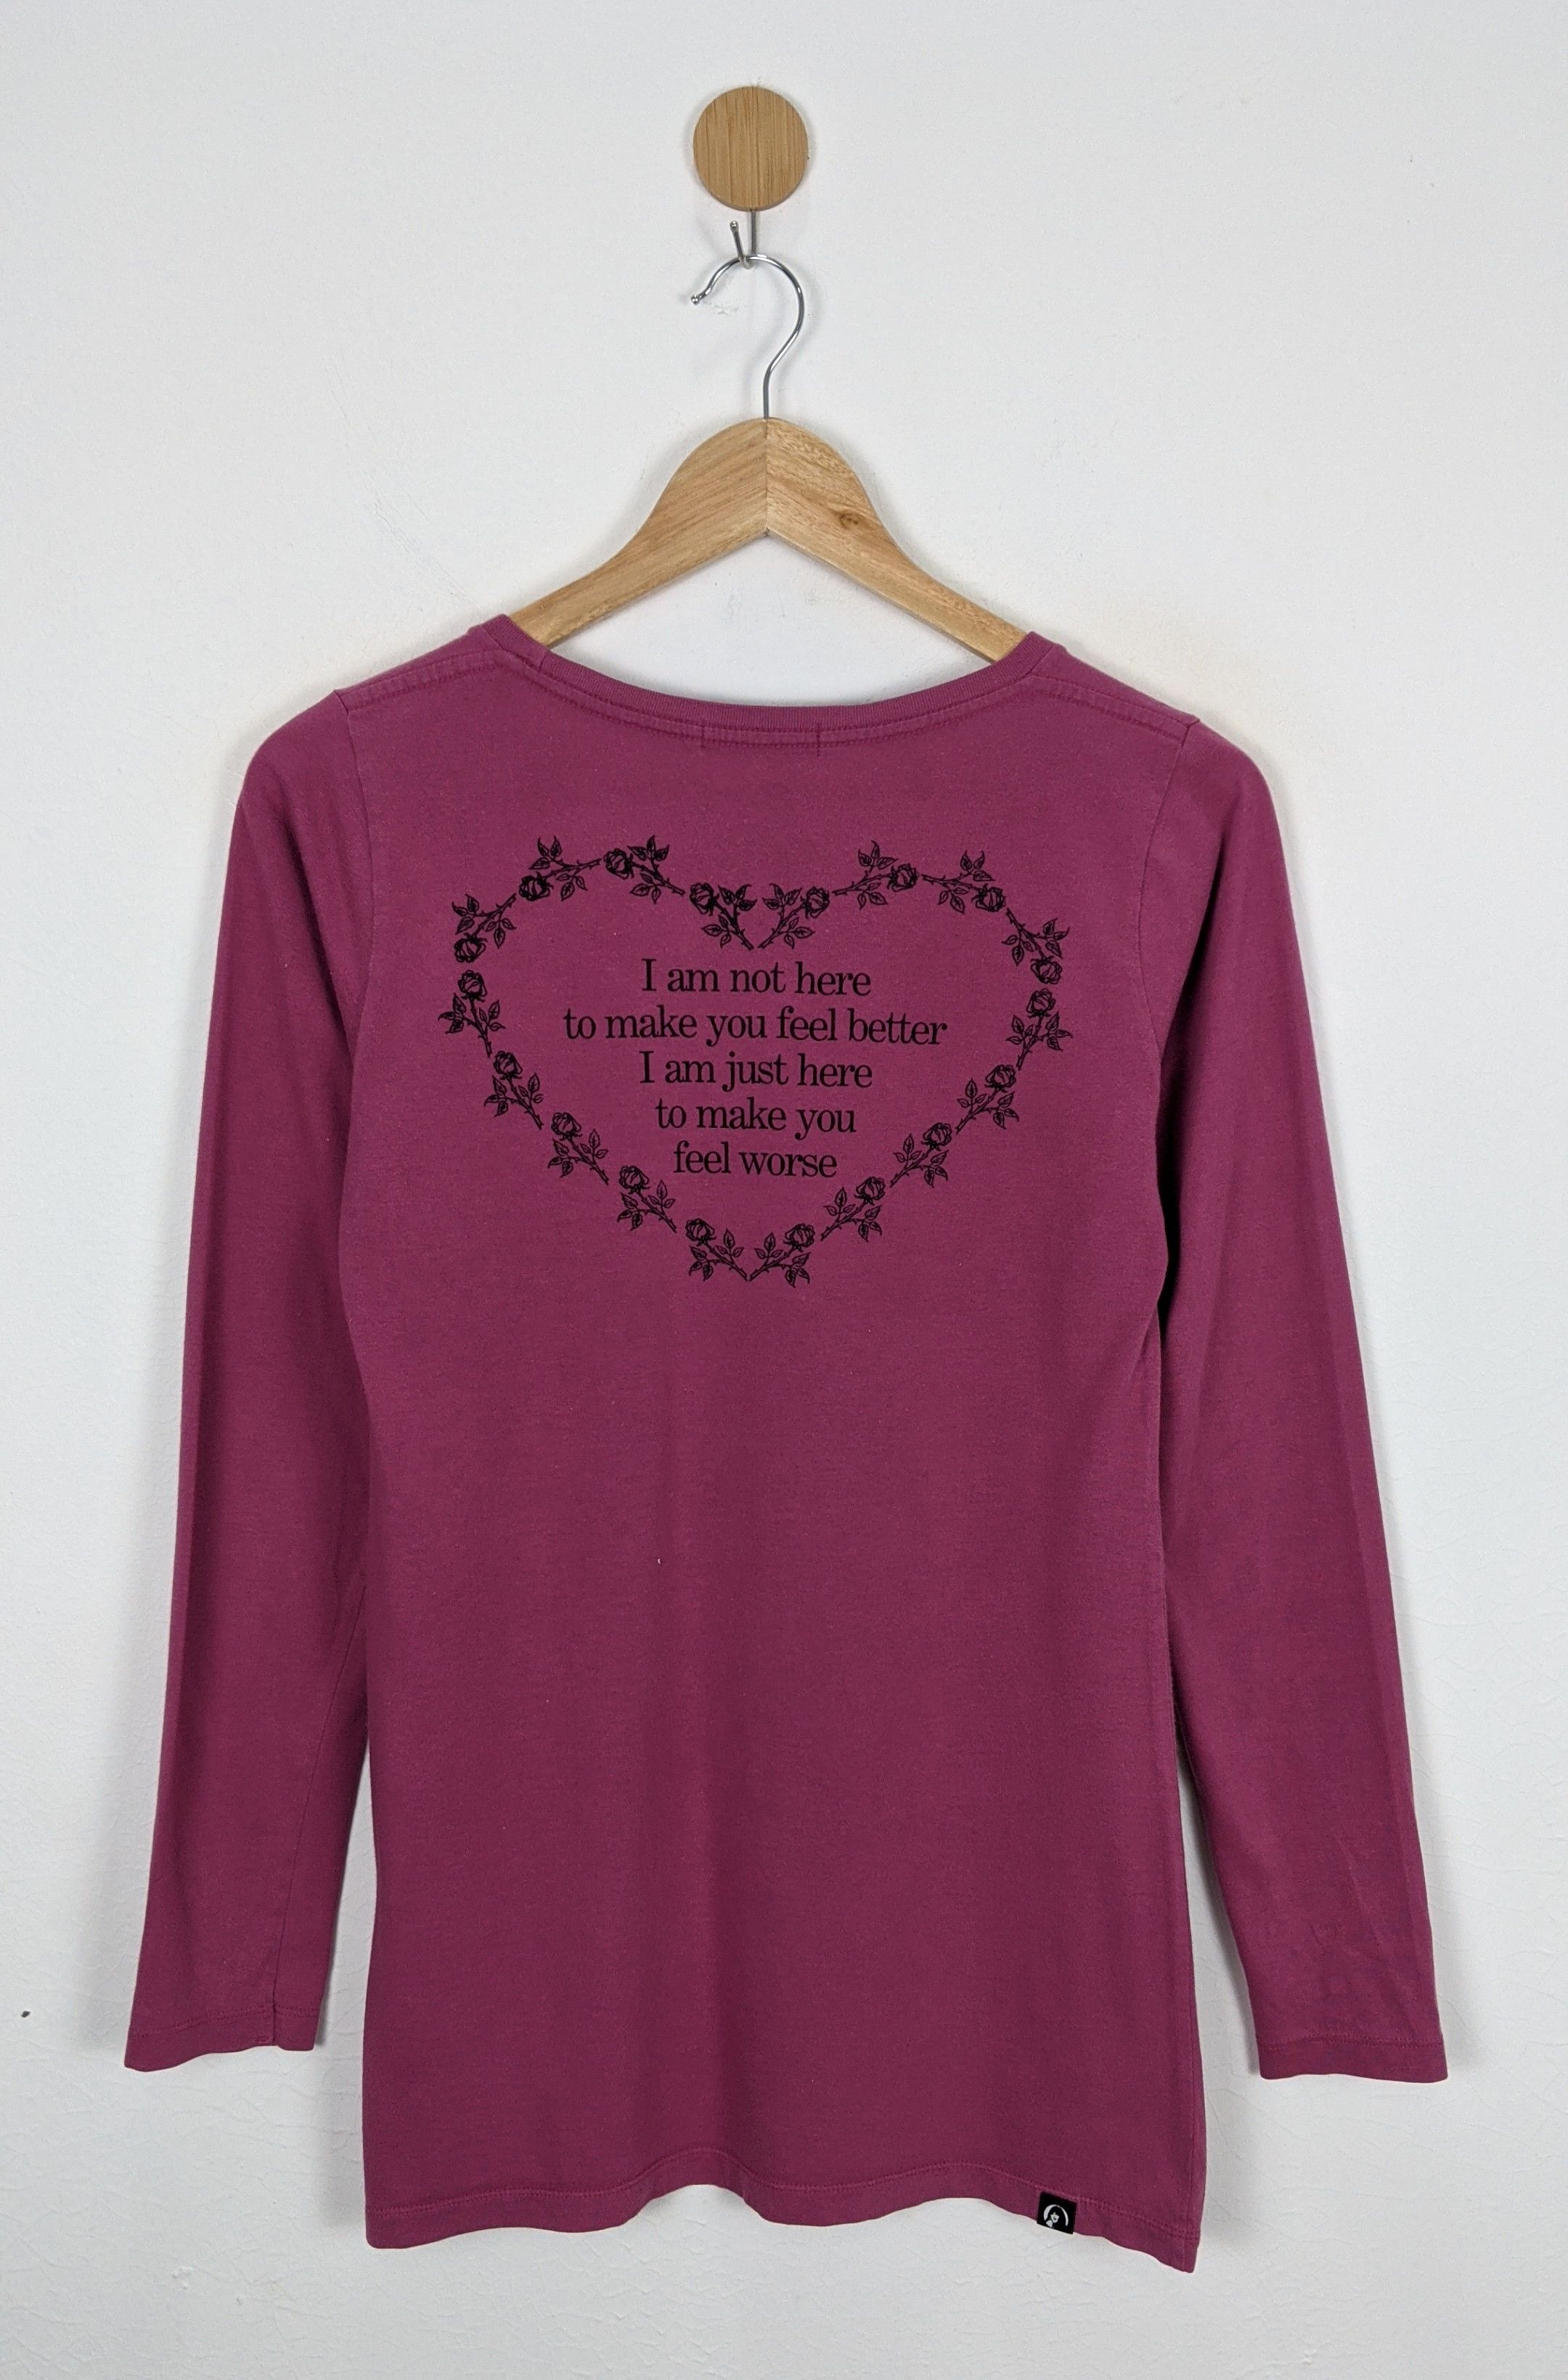 Hysteric Glamour x Courtney Love Hole shirt - 2